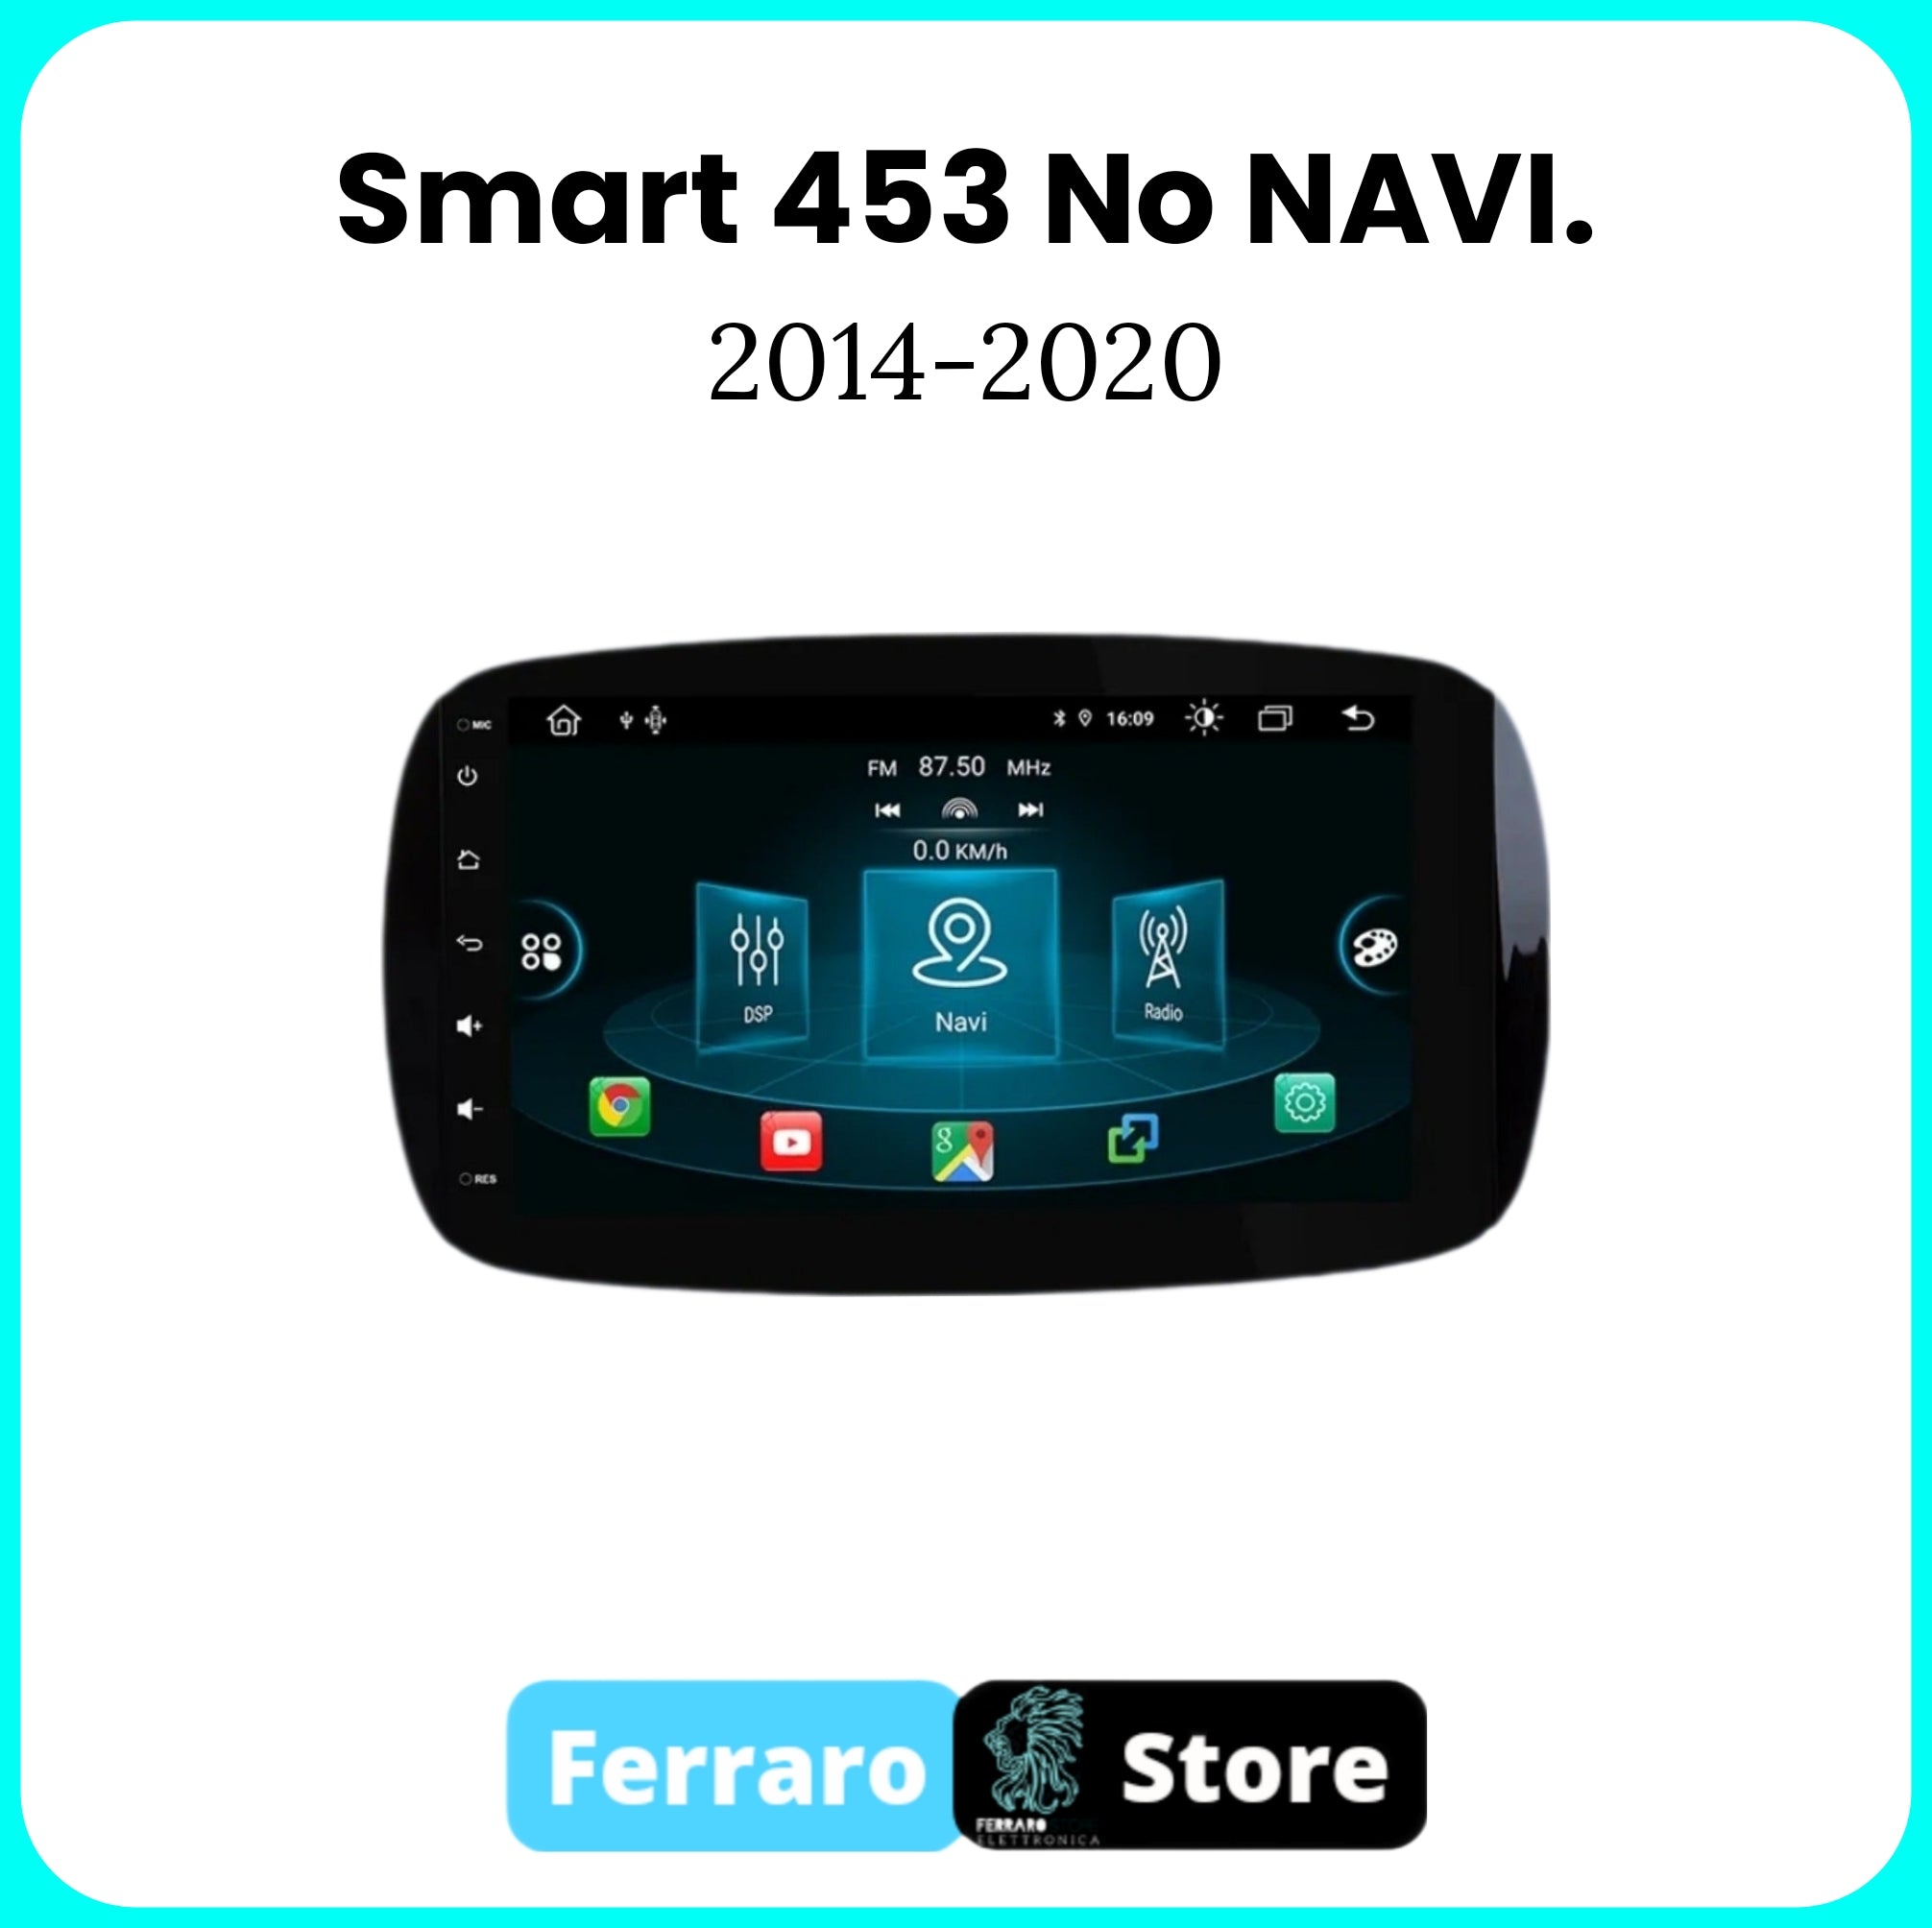 Autoradio per SMART 453 NO NAVI. [2014 - 2020] - Autoradio 2Din 9"Pollici, con Sistema Intelligente, GPS, Navigatore, Radio, Wifi.